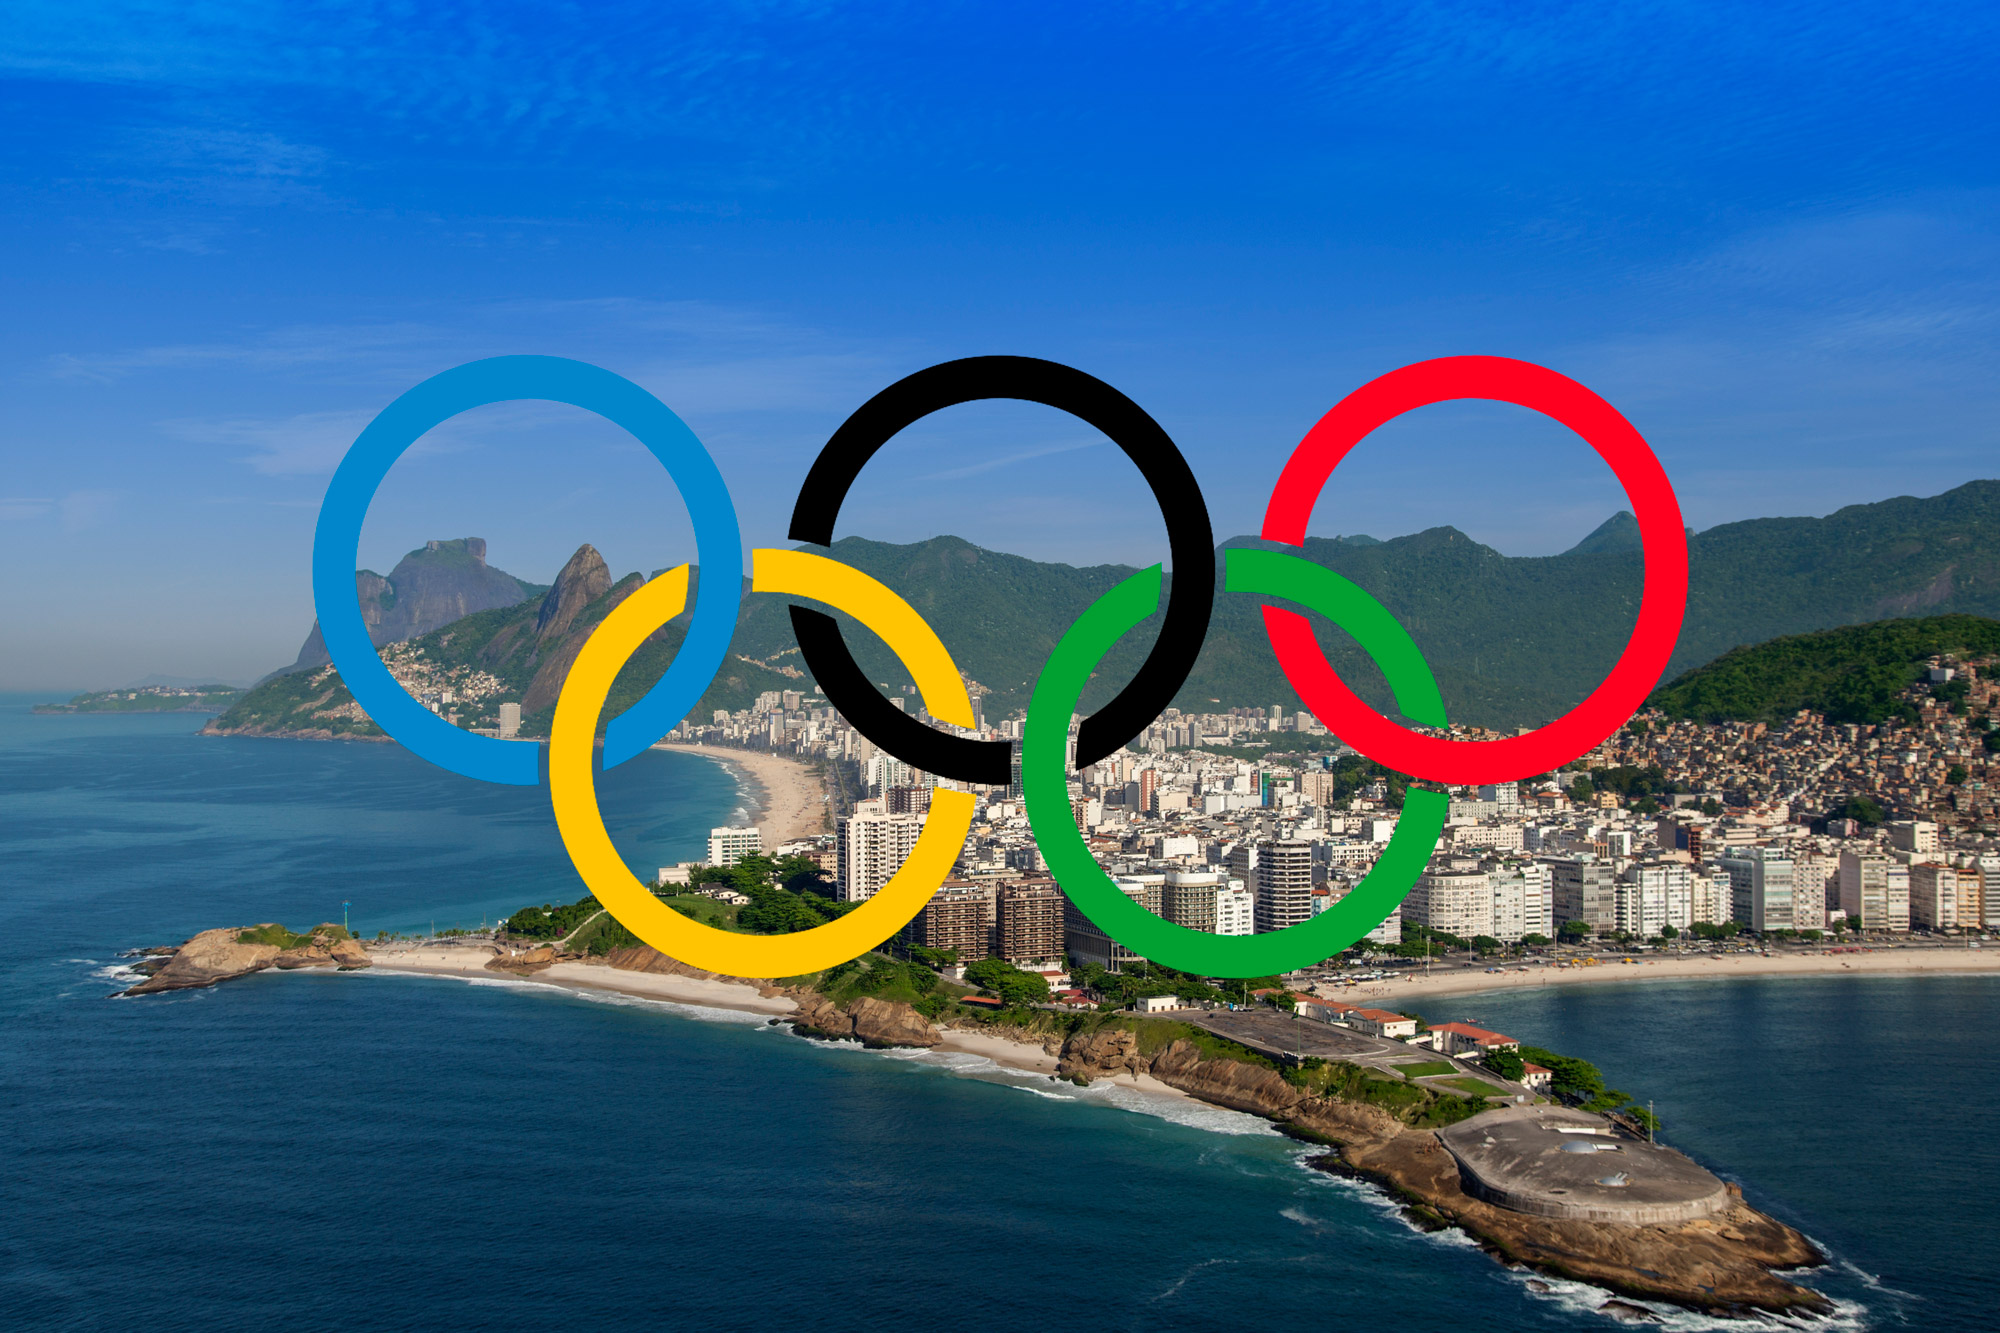 Rio 2016 Olympics Triathlon Event Location Guide Rules Fort Copacabana